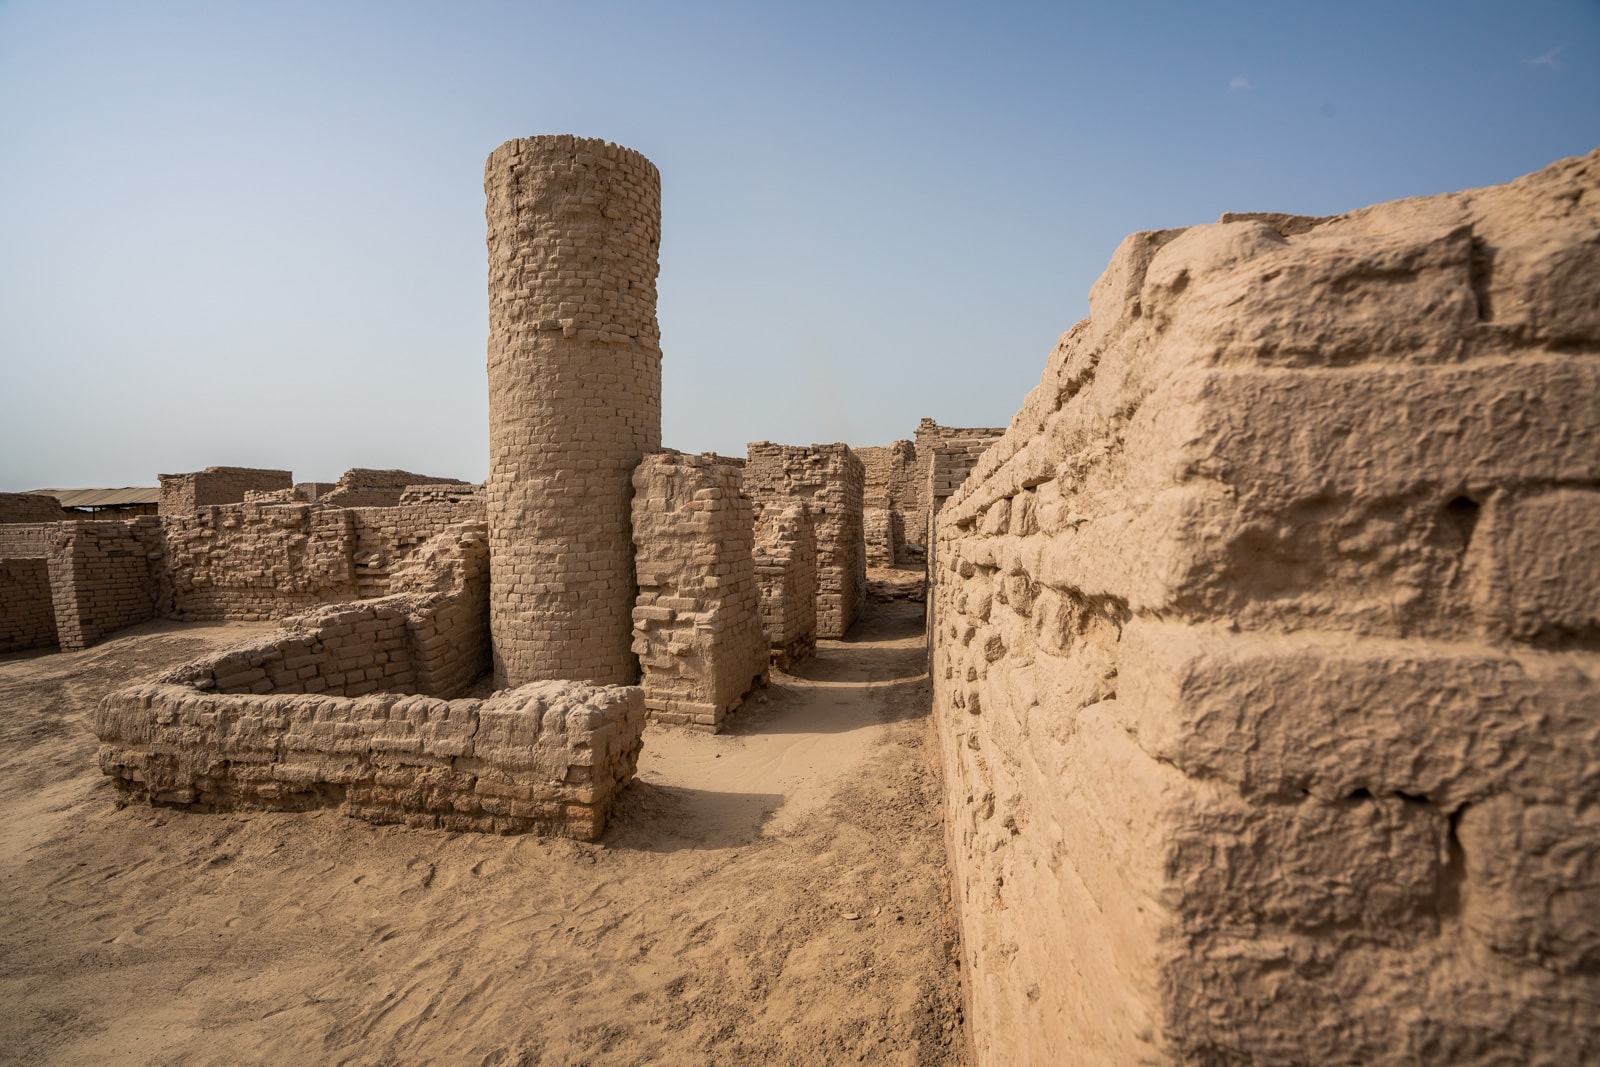 Sindh travel guide - Brick ruins at Moenjo-daro - Lost With Purpose travel blog